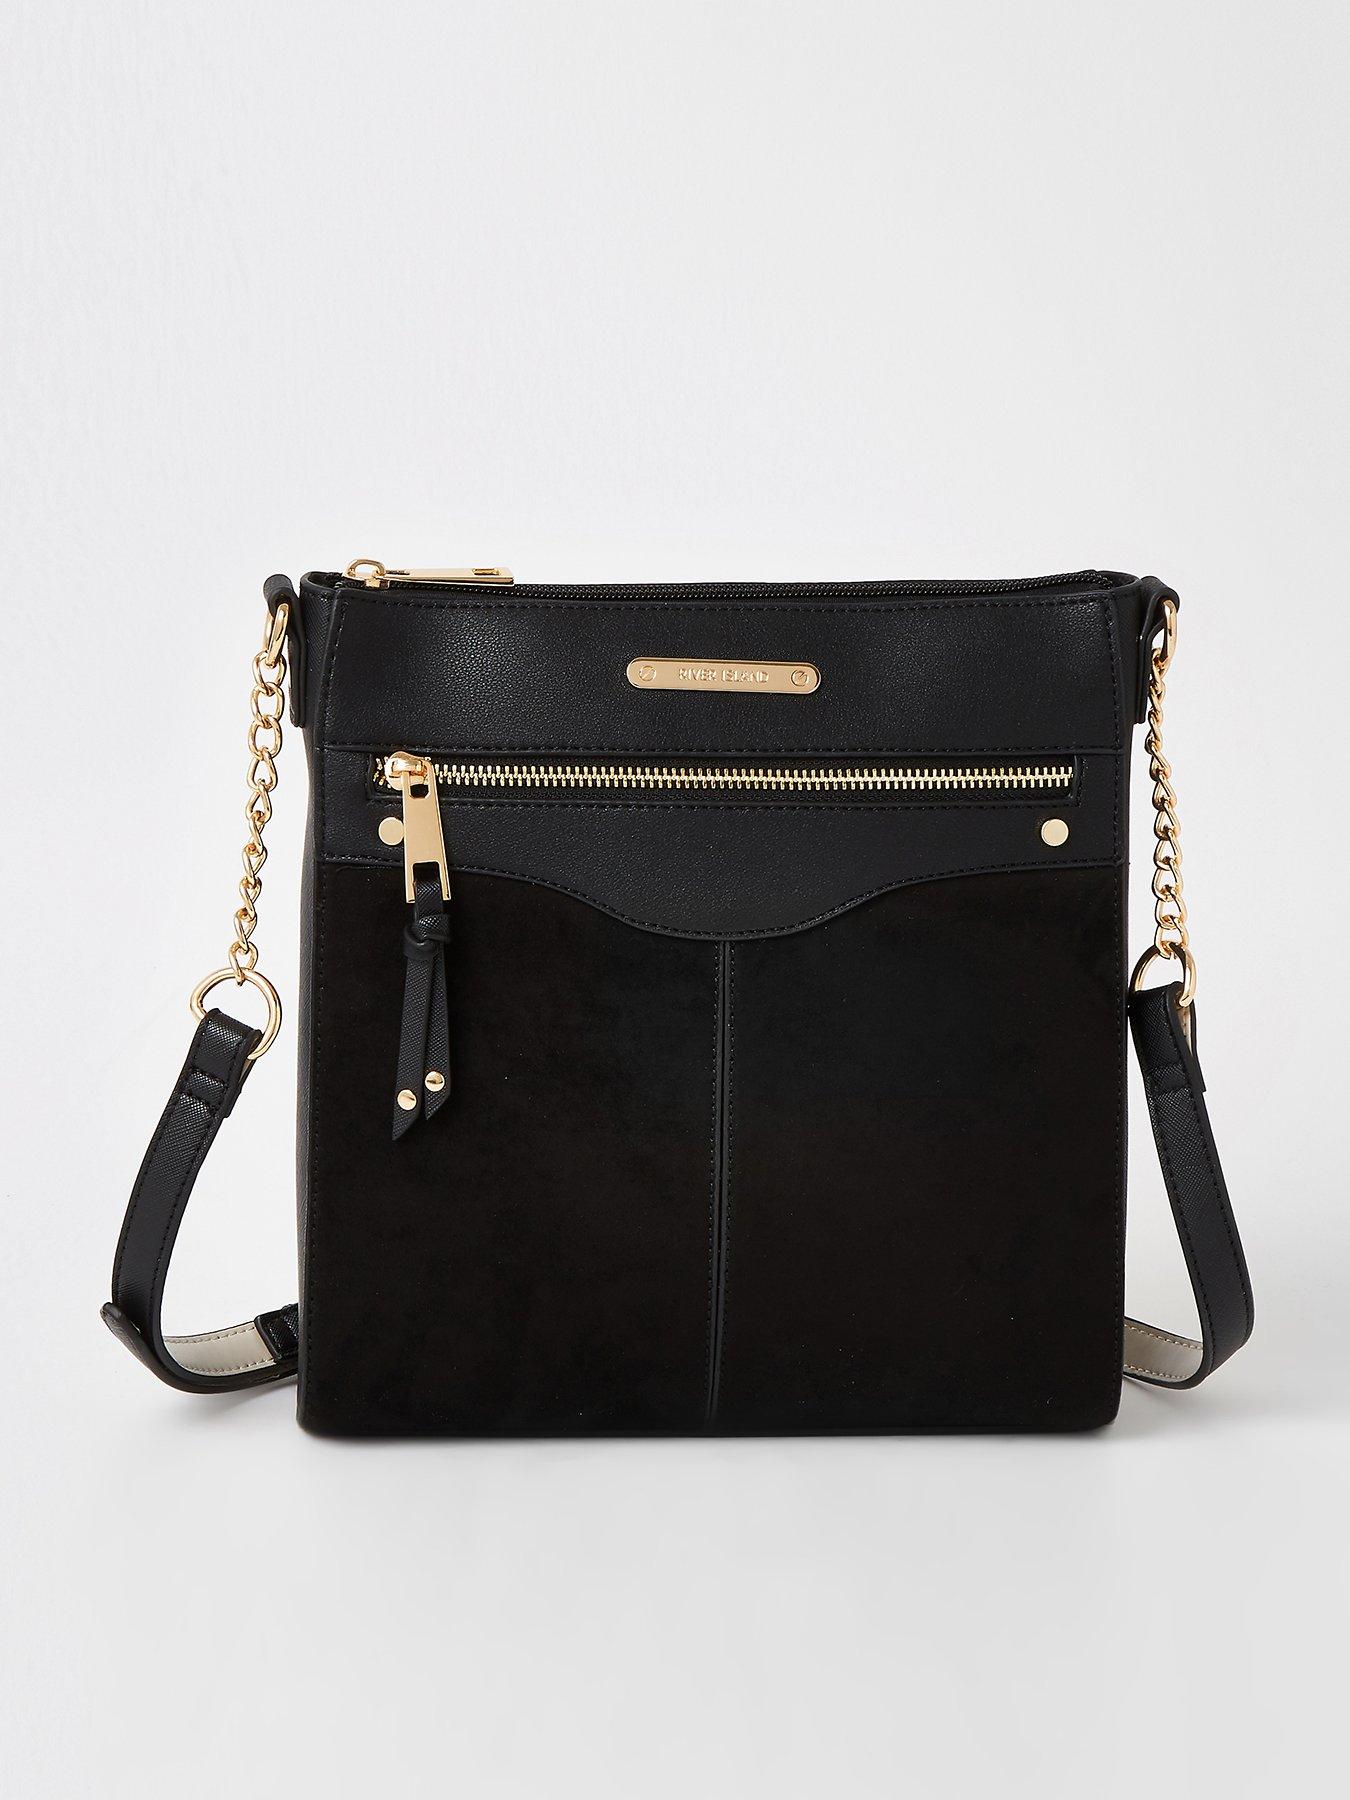 black handbags uk